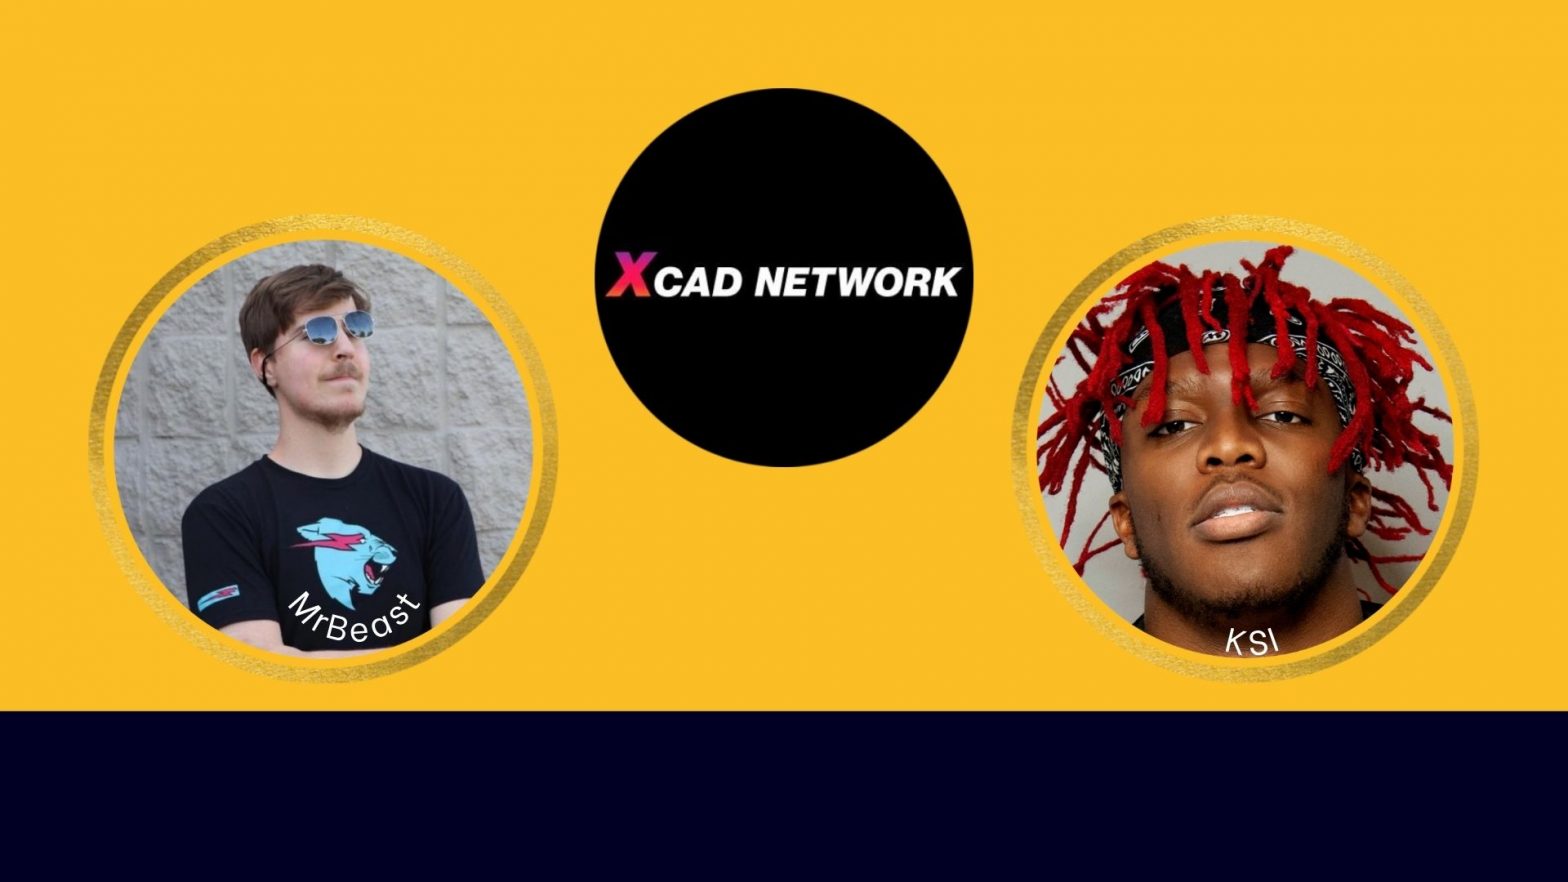 XCAD Network获得YouTubers Beasdfsst先生和KSI先生的投资